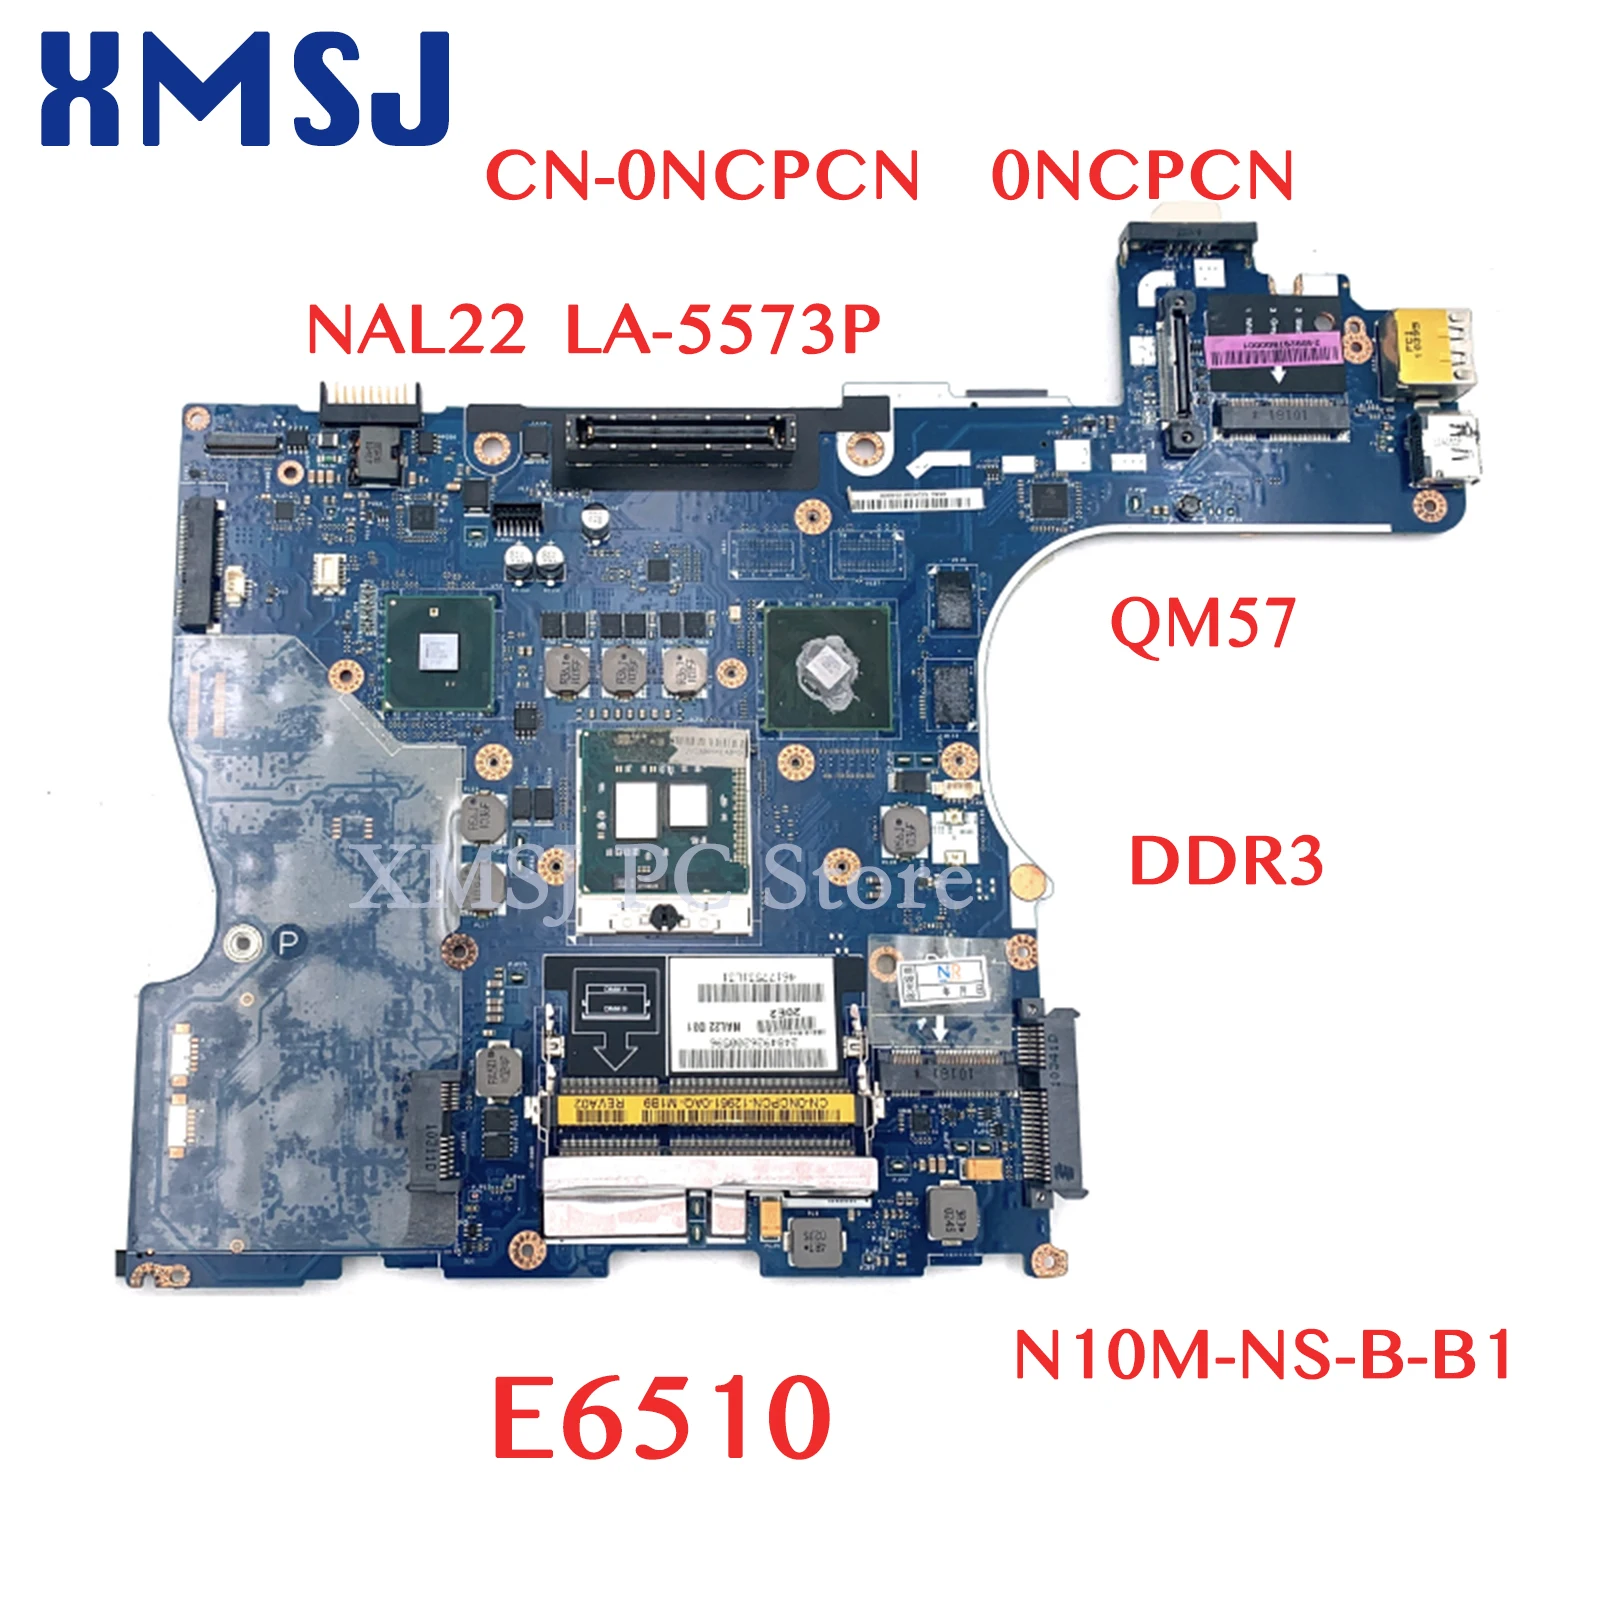 XMSJ For NAL22 LA-5573P Dell Latitude E6510 Laptop Motherboard CN-0NCPCN 0NCPCN QM57 DDR3 N10M-NS-B-B1 GPU Onboard Free CPU